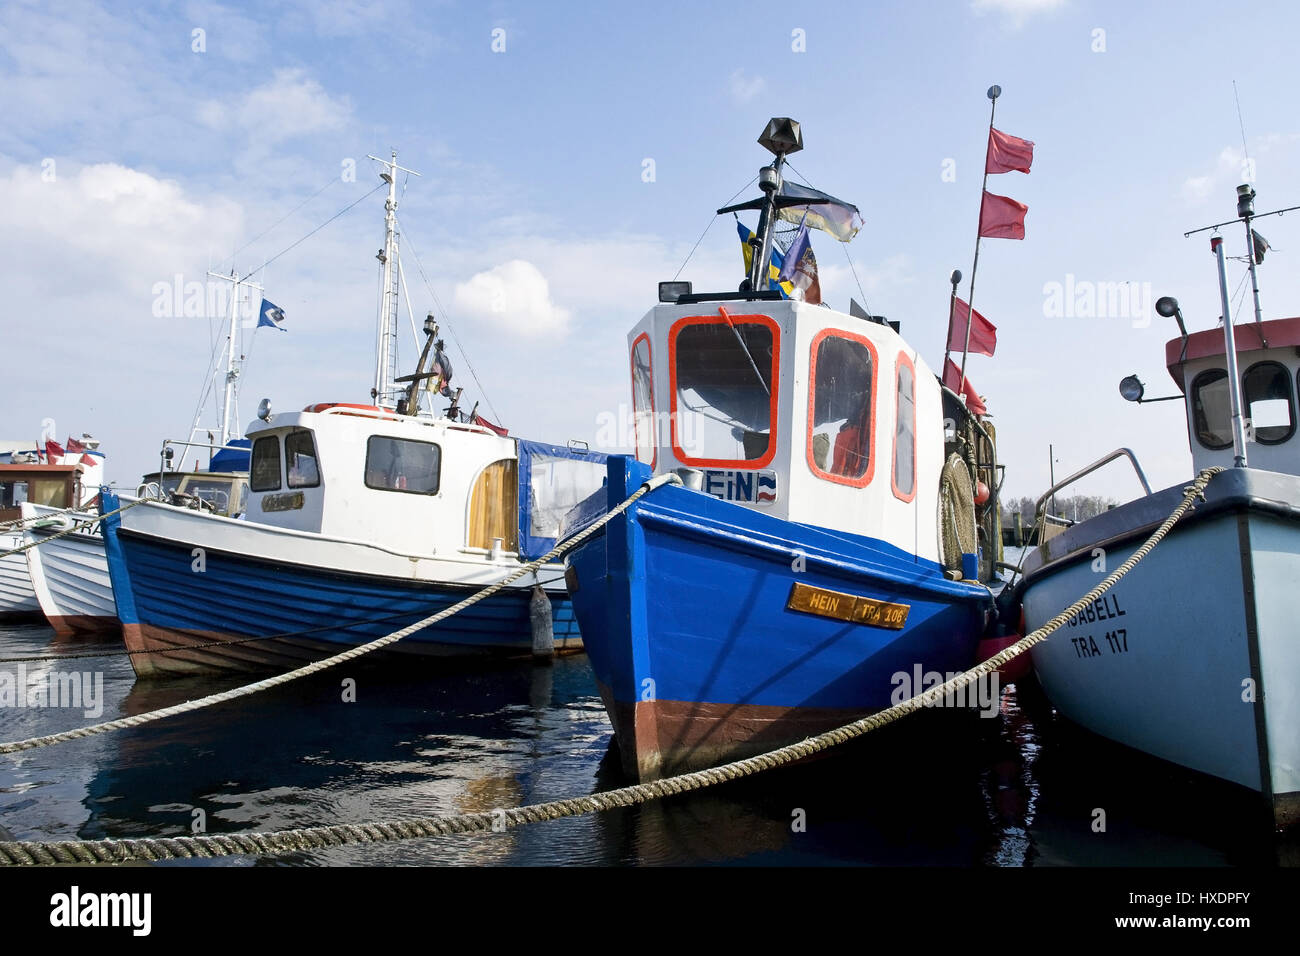 La pesca de arrastre en el puerto, Fischkutter im Hafen Foto de stock